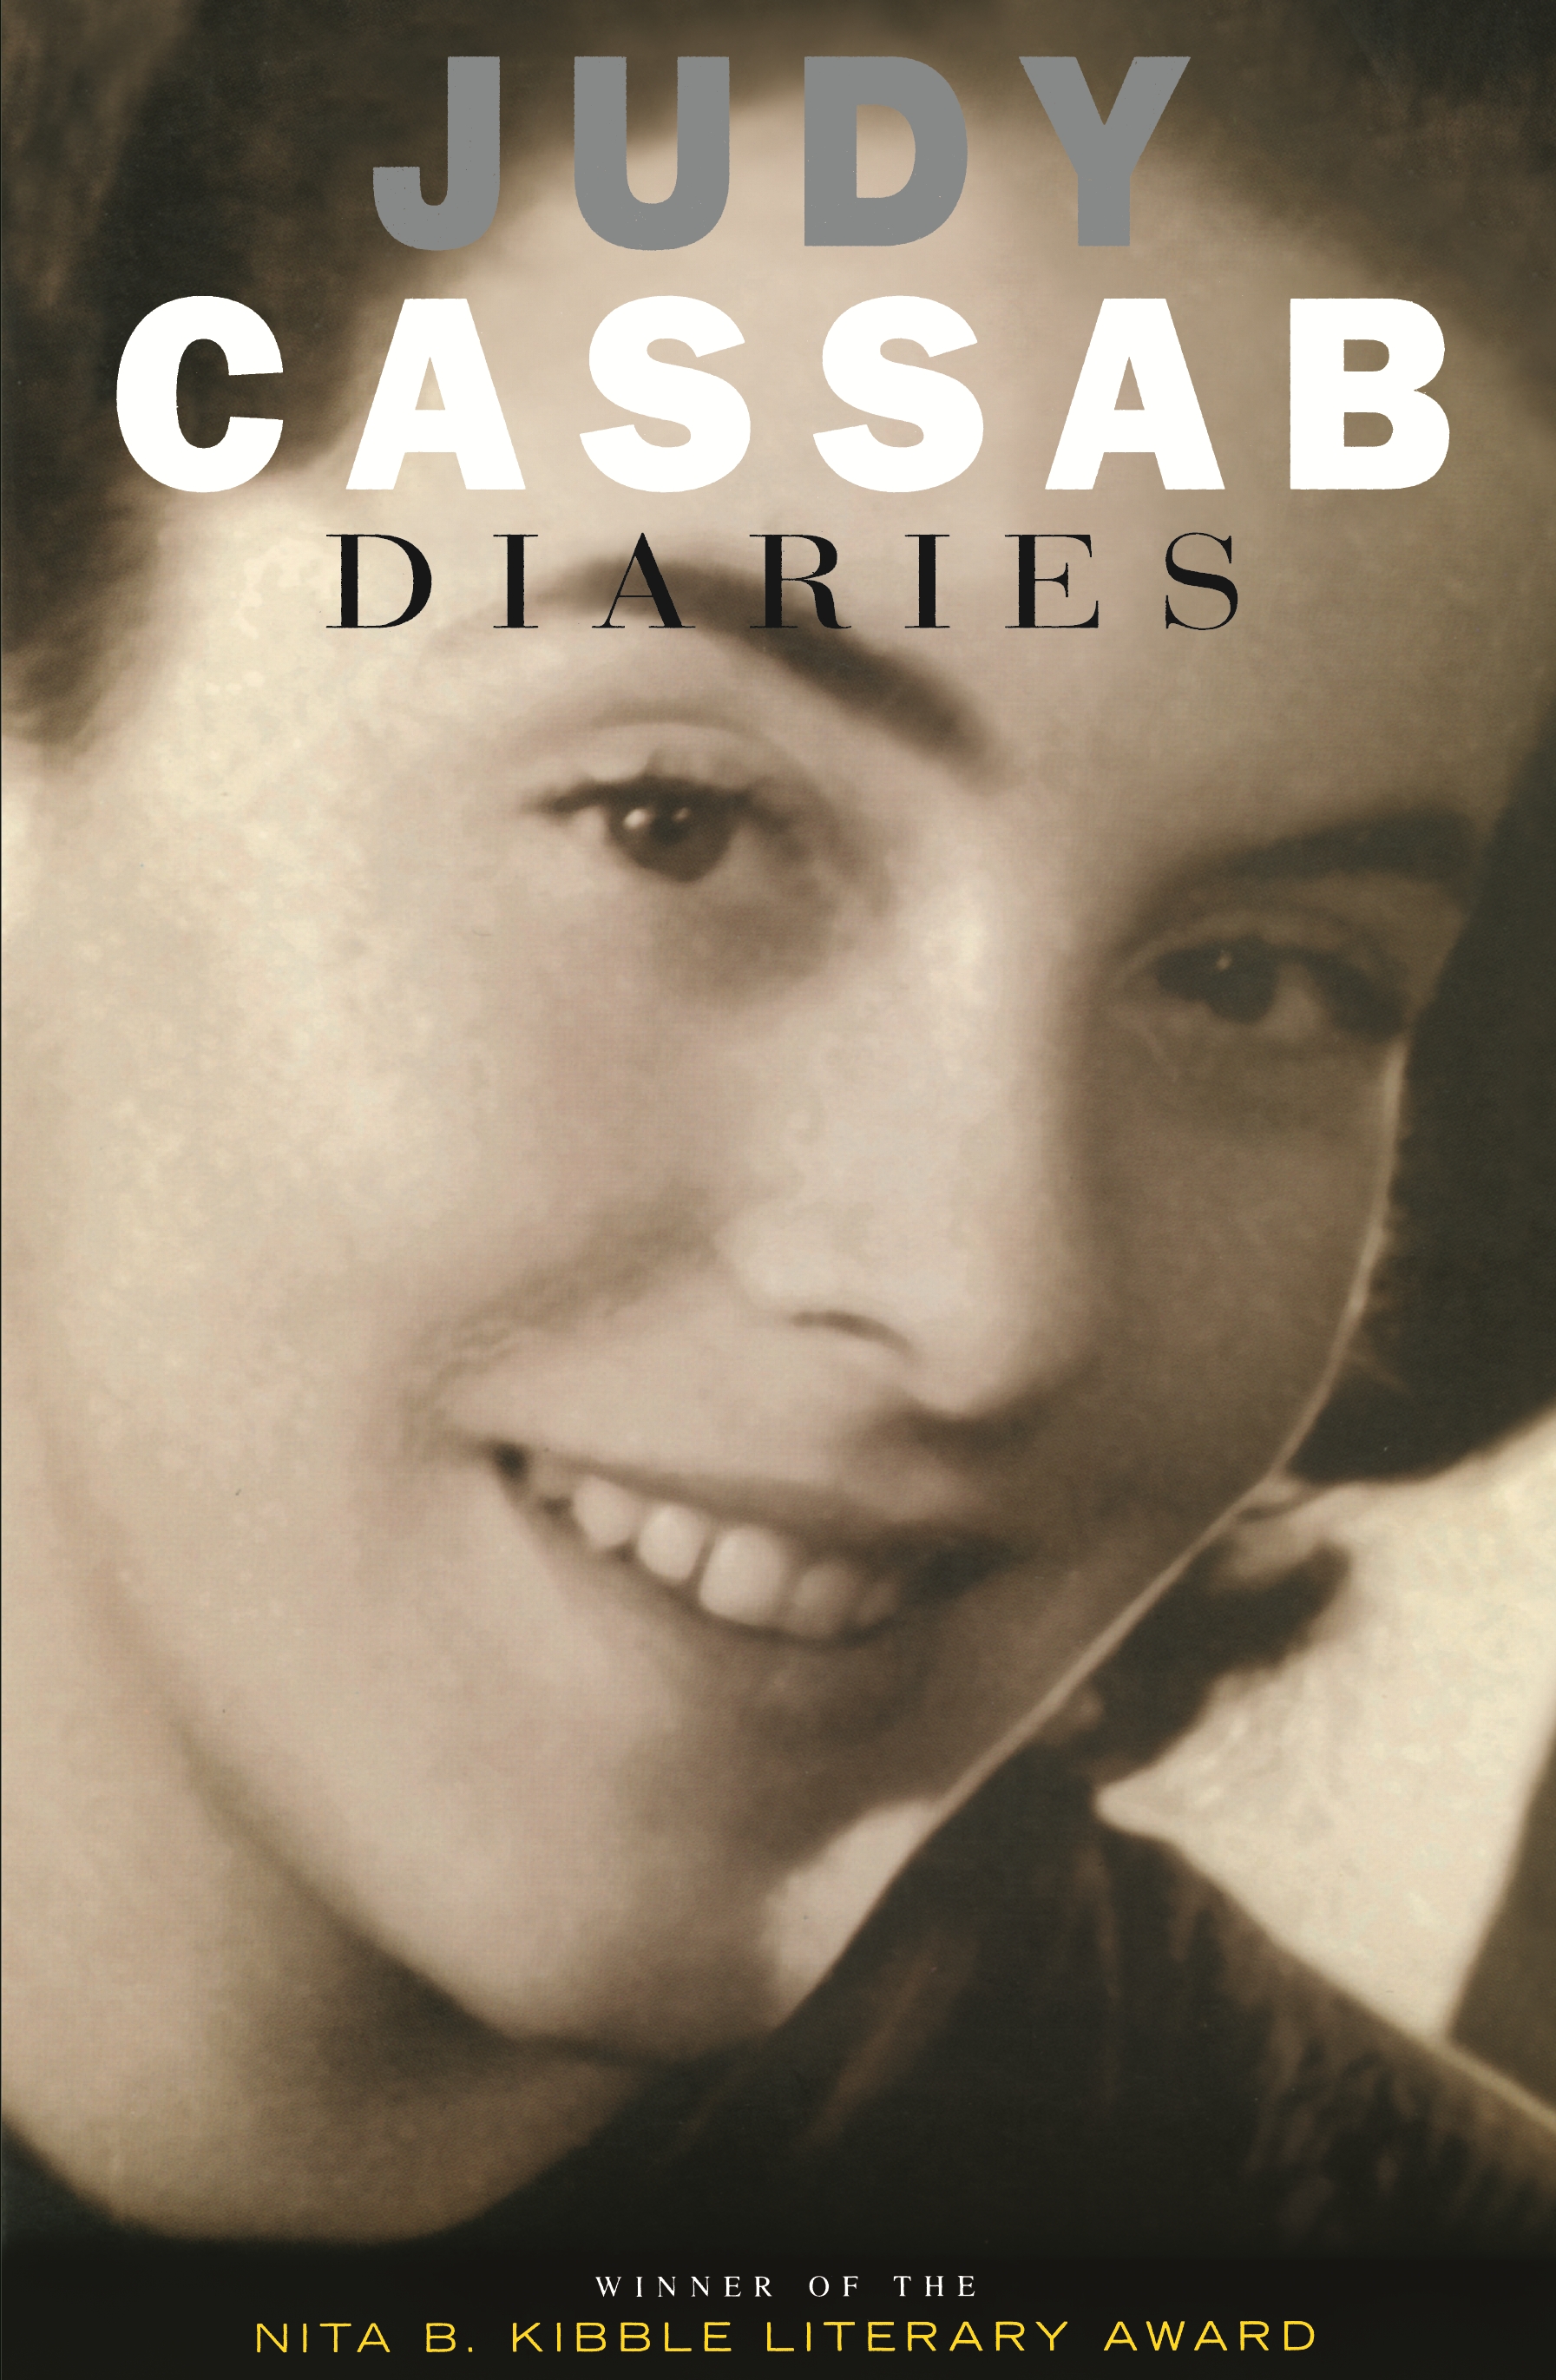 Judy Cassab Diaries by Judy Cassab - Penguin Books Australia